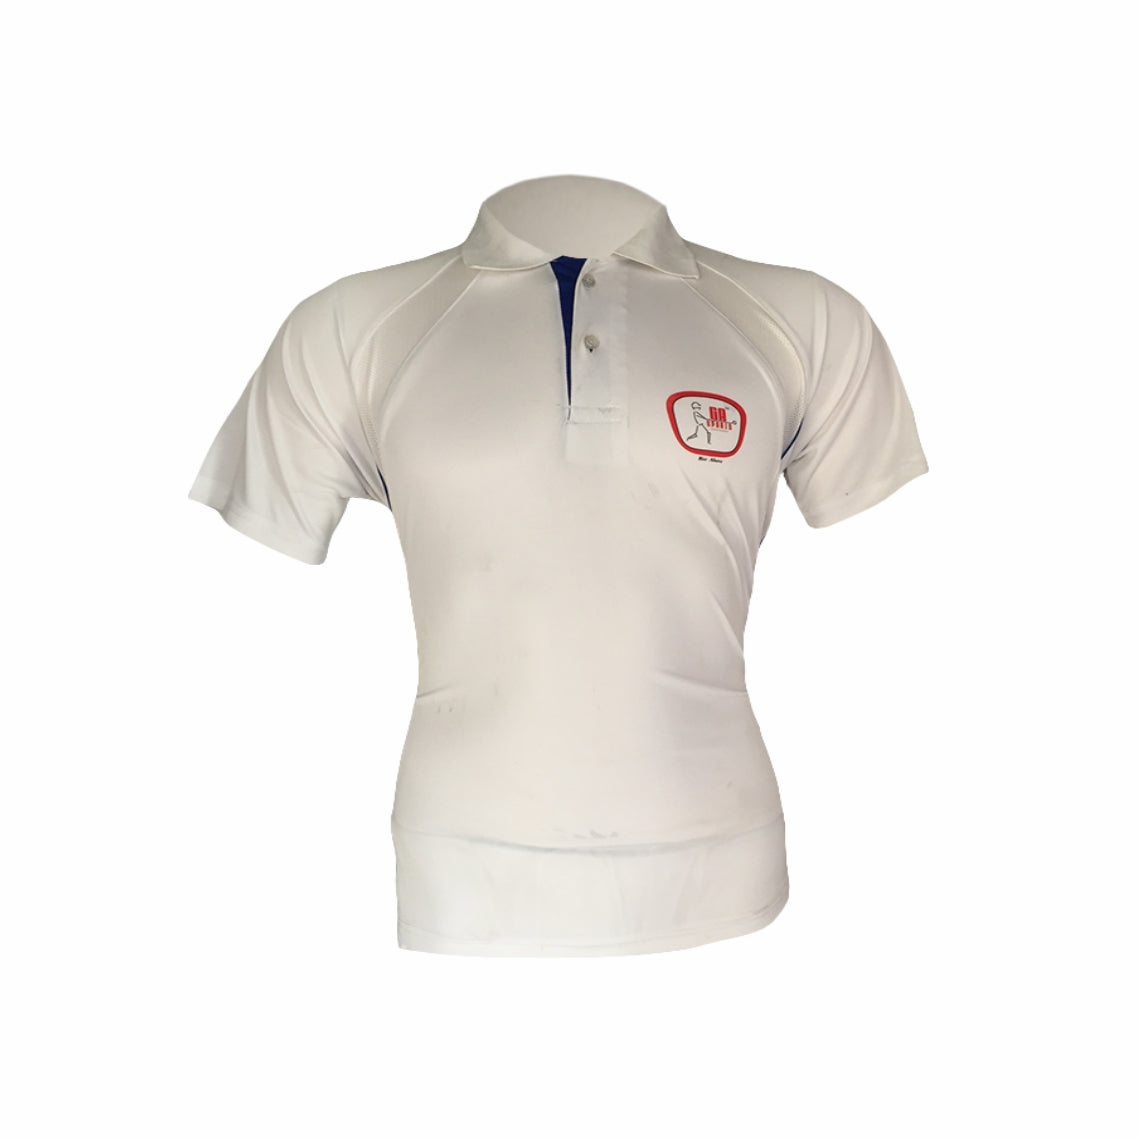 GA Club Cricket Kit Combo (Tshirt + Lower)